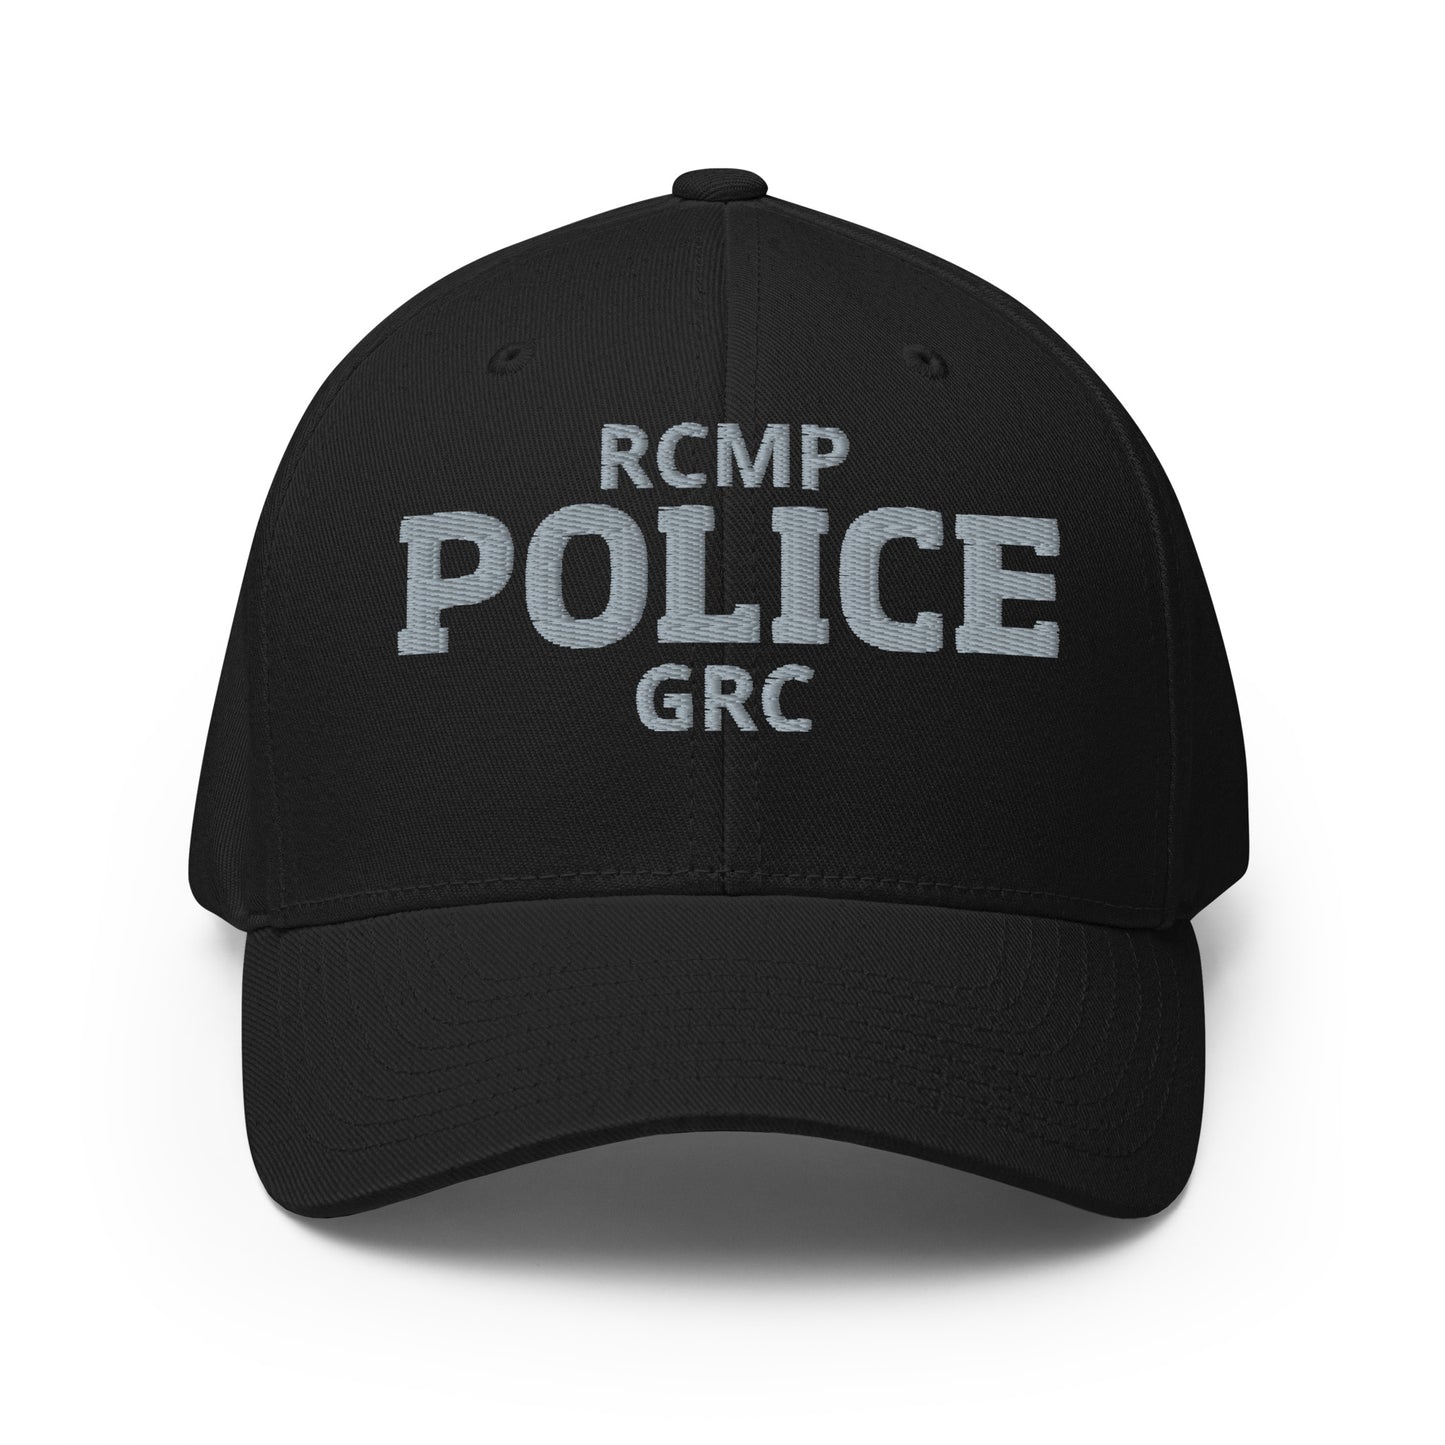 Royal Canadian Mounted Police (RCMP POLICE GRC) Duty Flexfit Ballcap